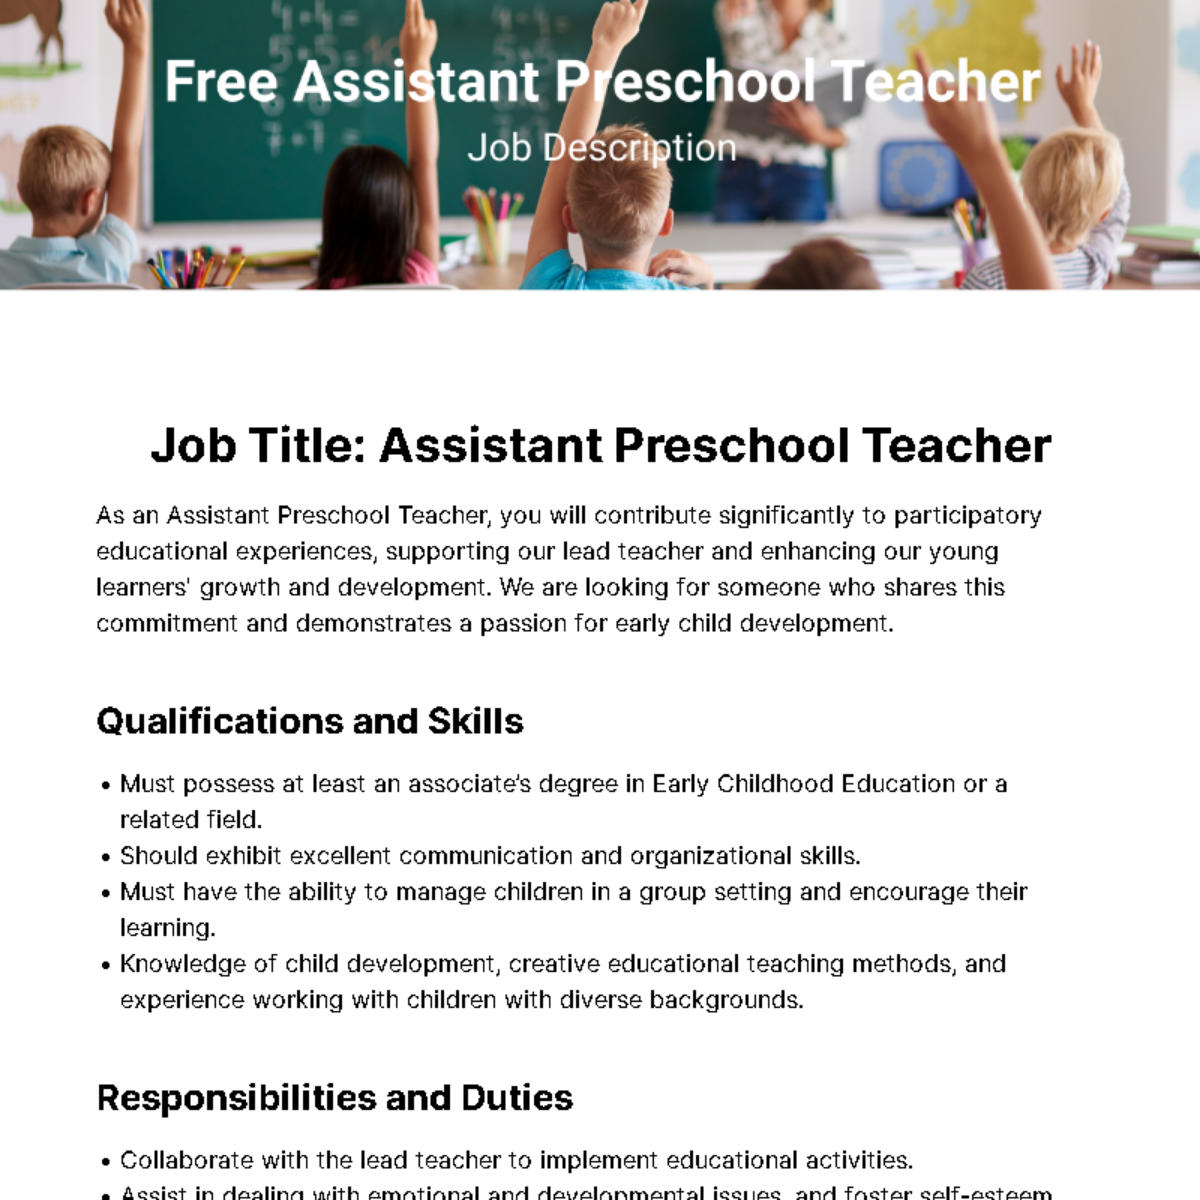 Free Assistant Preschool Teacher Job Description Template